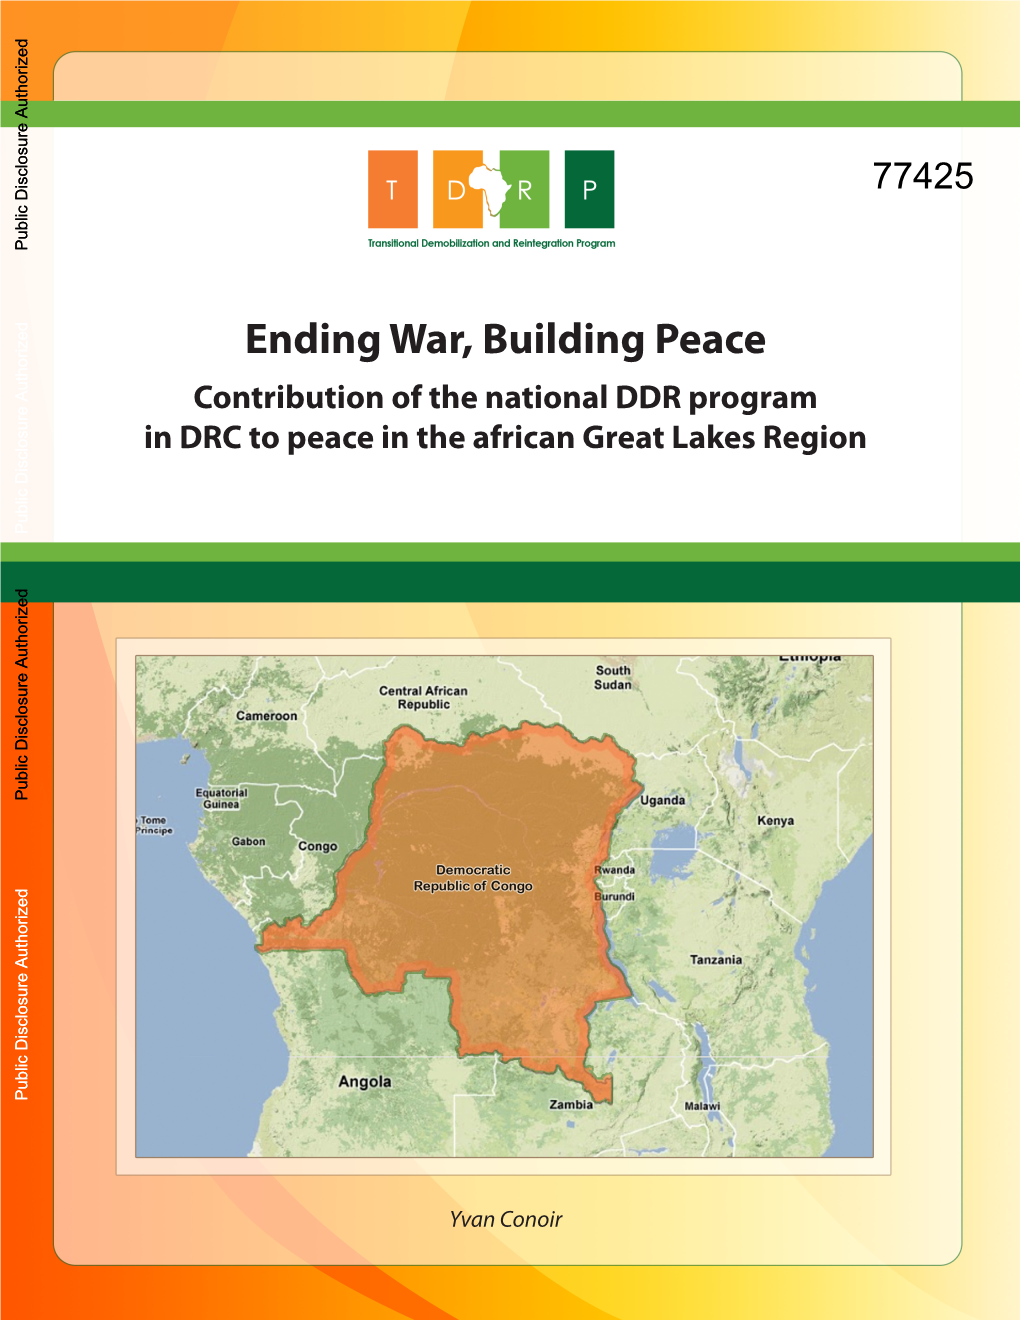 Annex I. Map of DRC